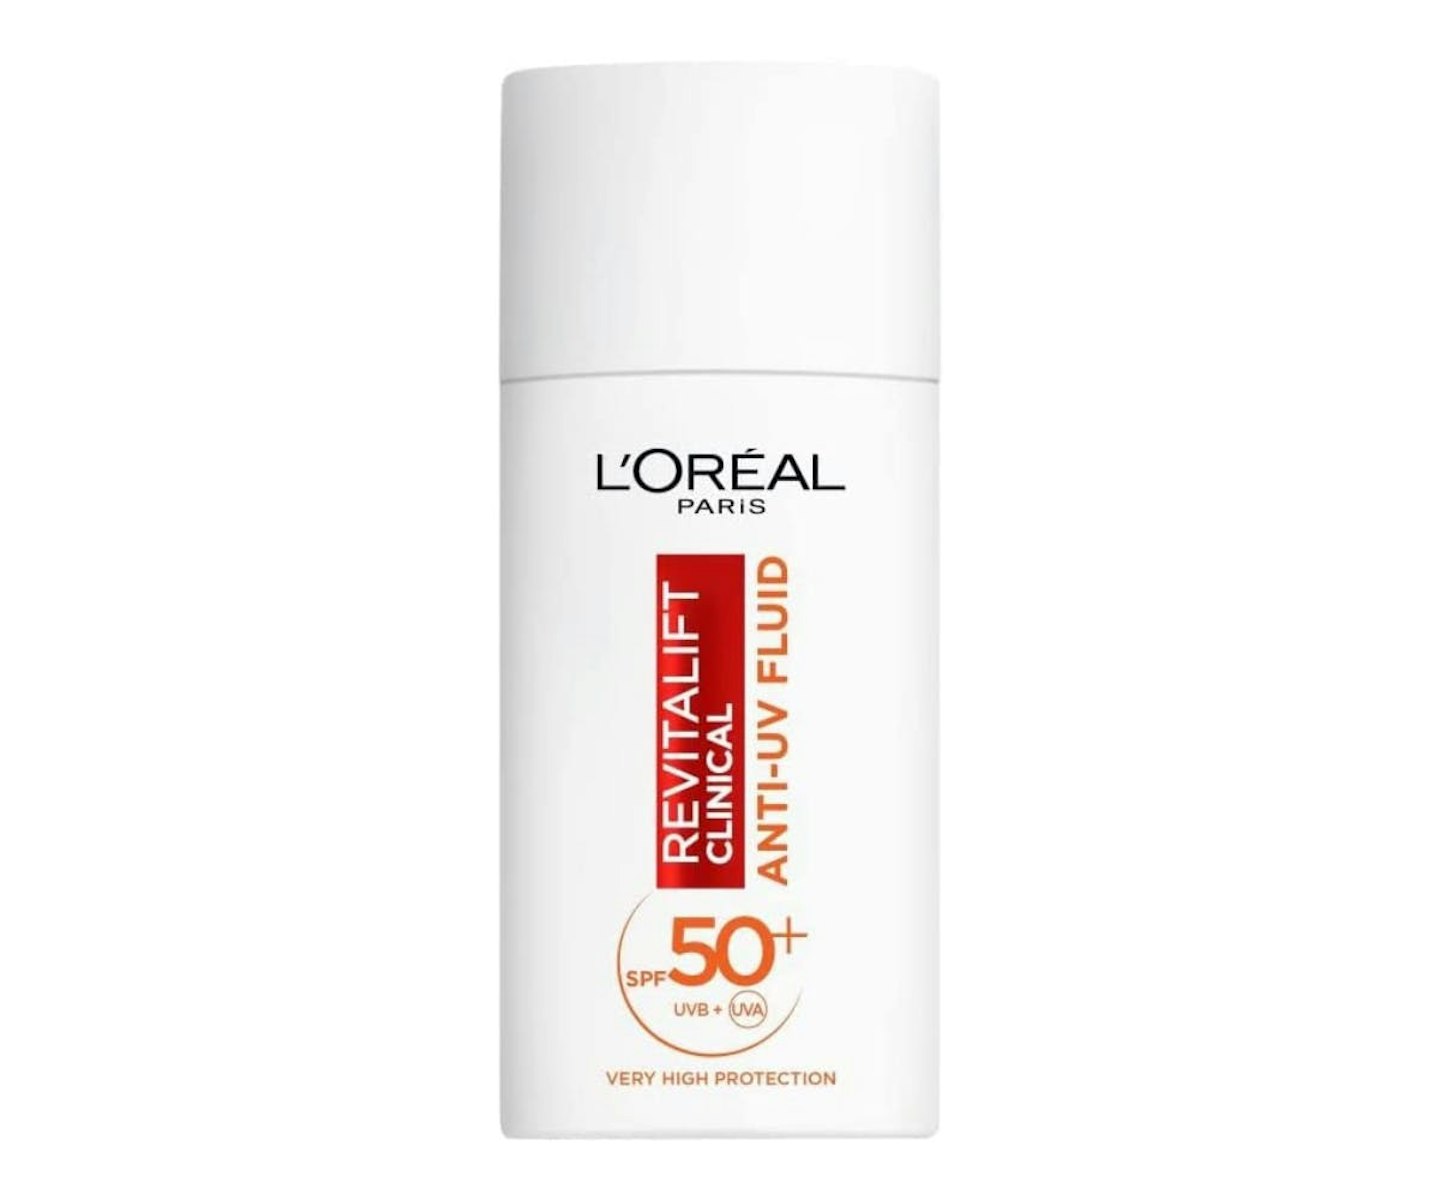  L'Oréal Paris Revitalift Clinical Vitamin C SPF 50+